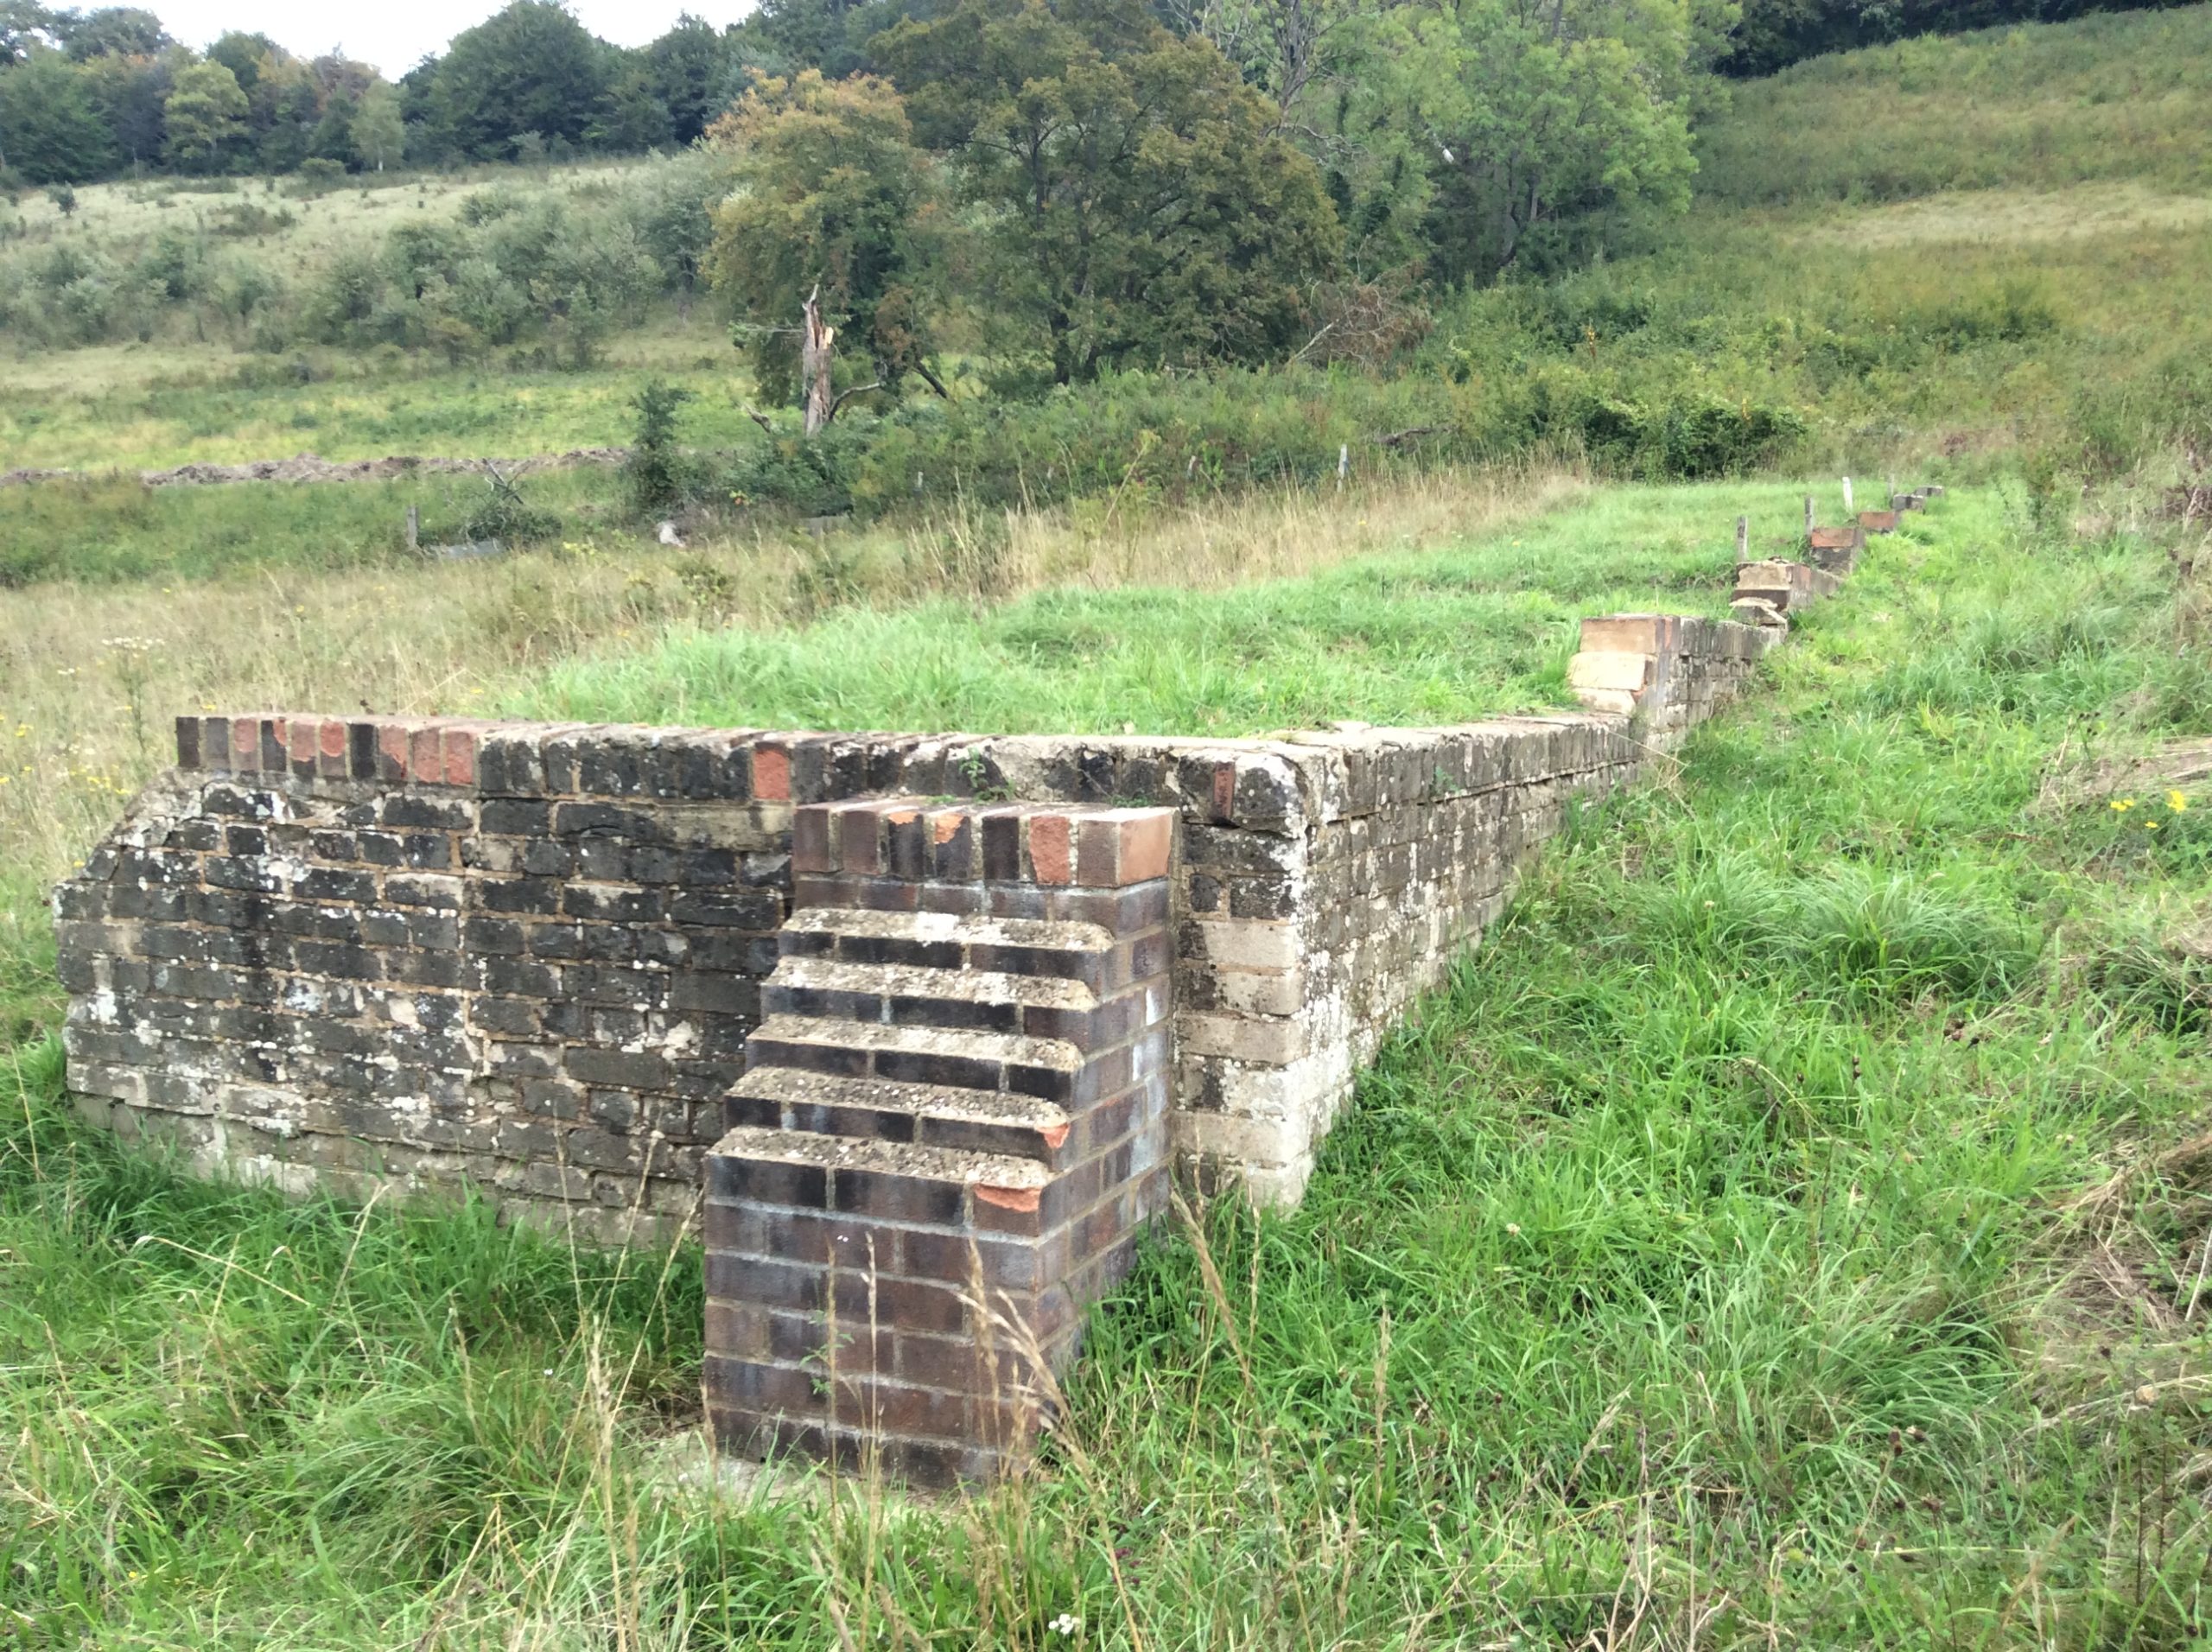 Brick wall in field